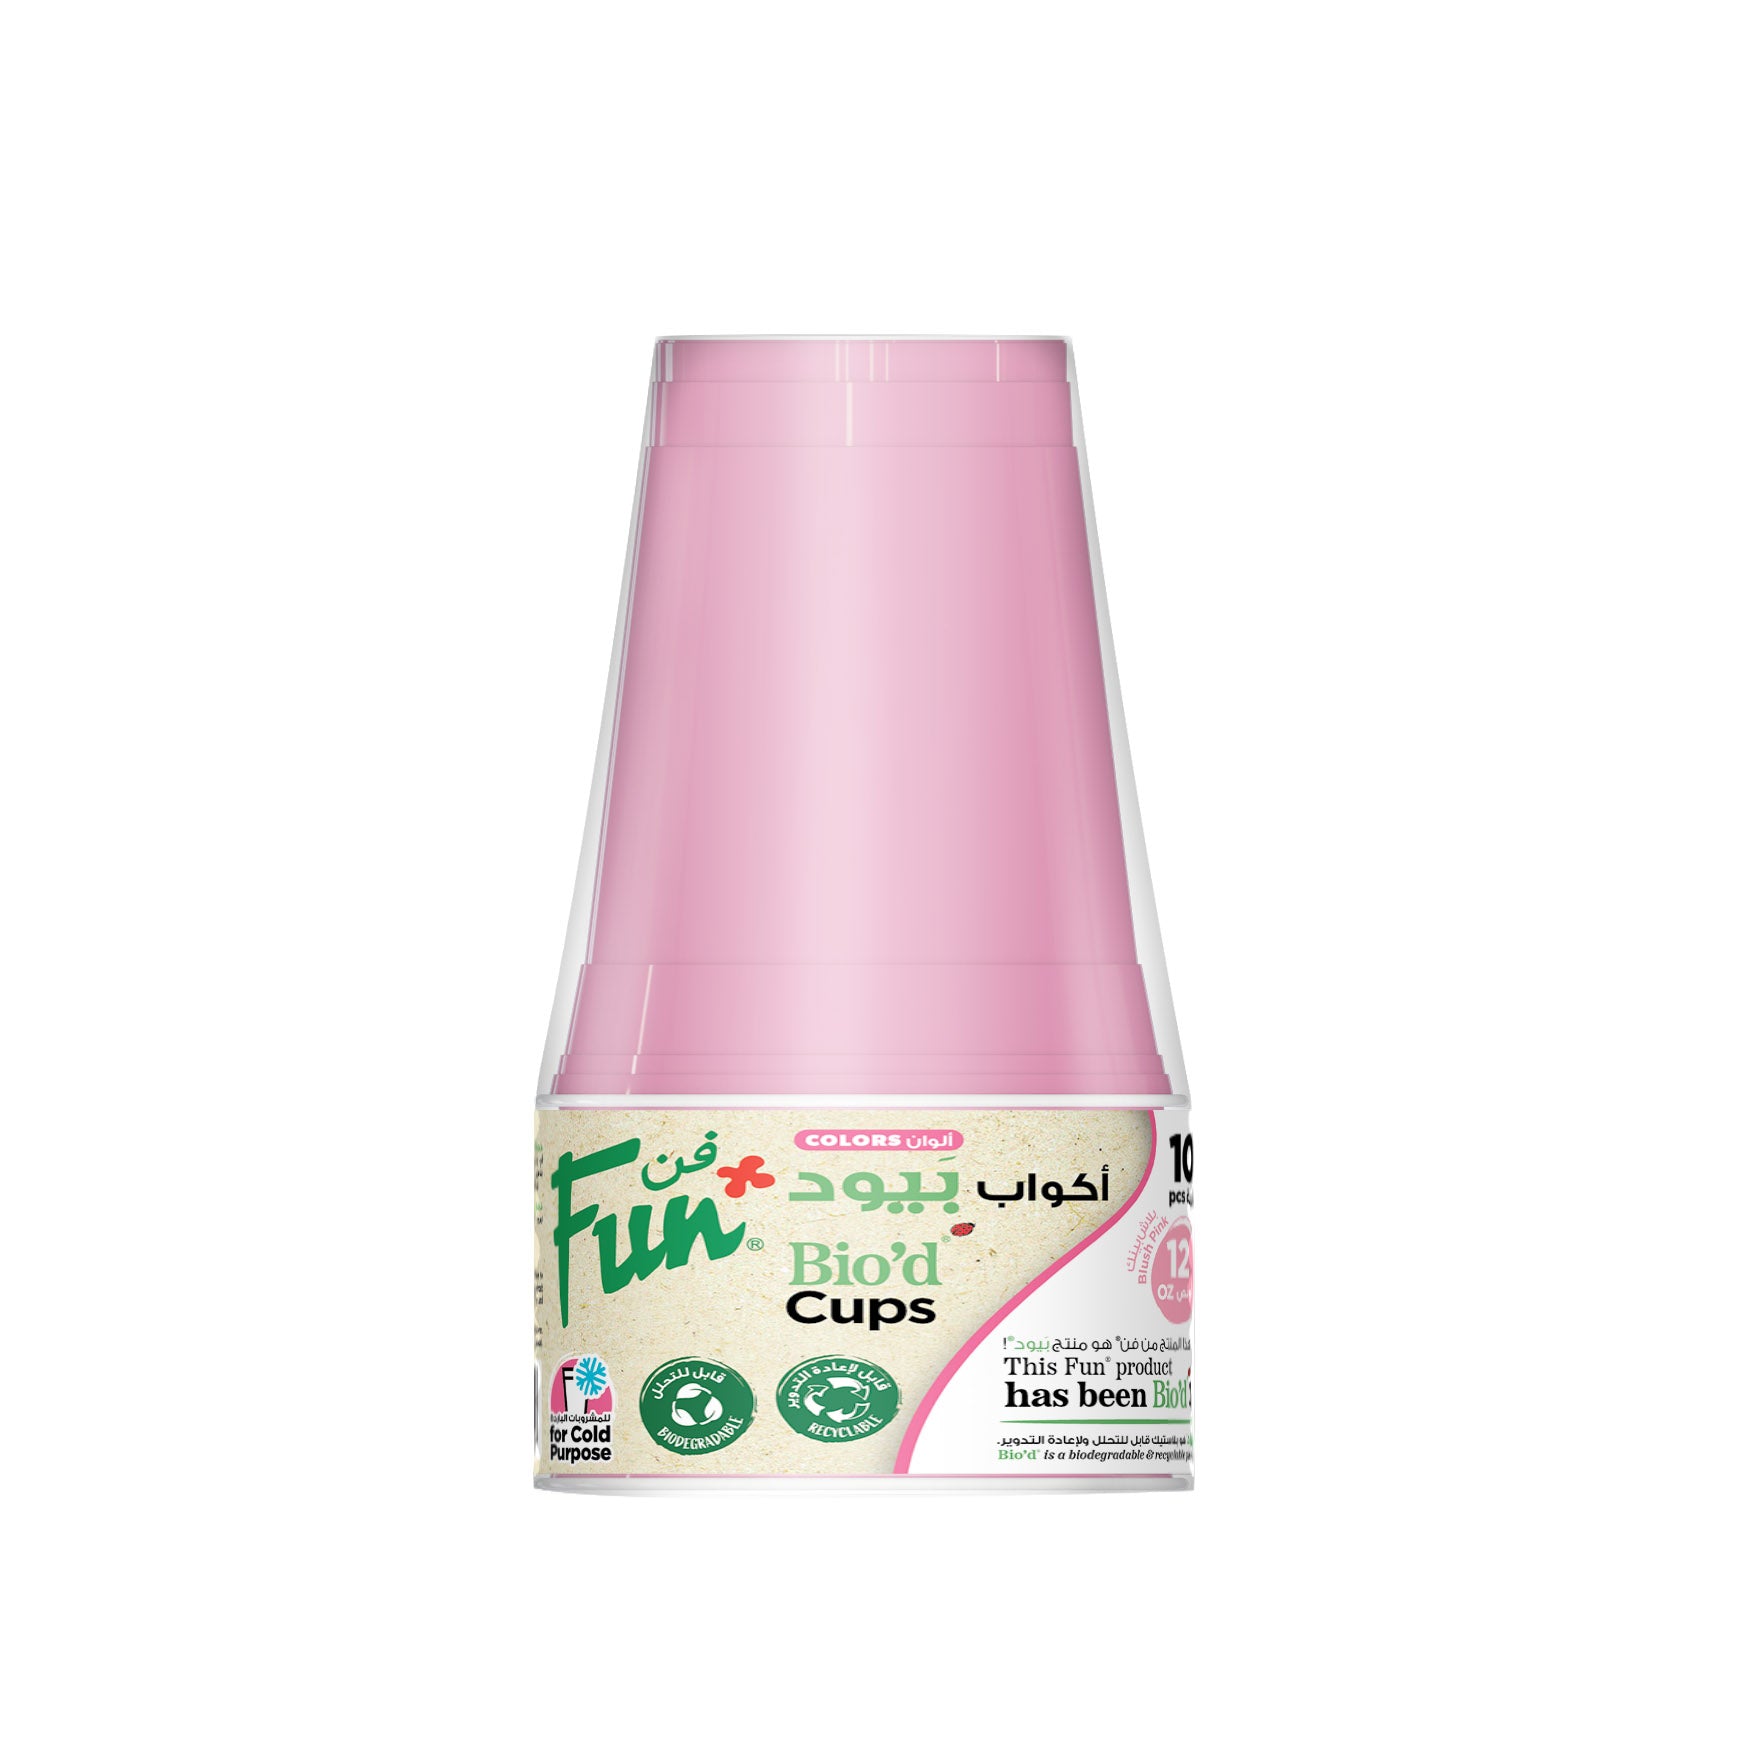 Fun Colors Bio`d Cups 12 oz - Blush Pink (Pack of 10)